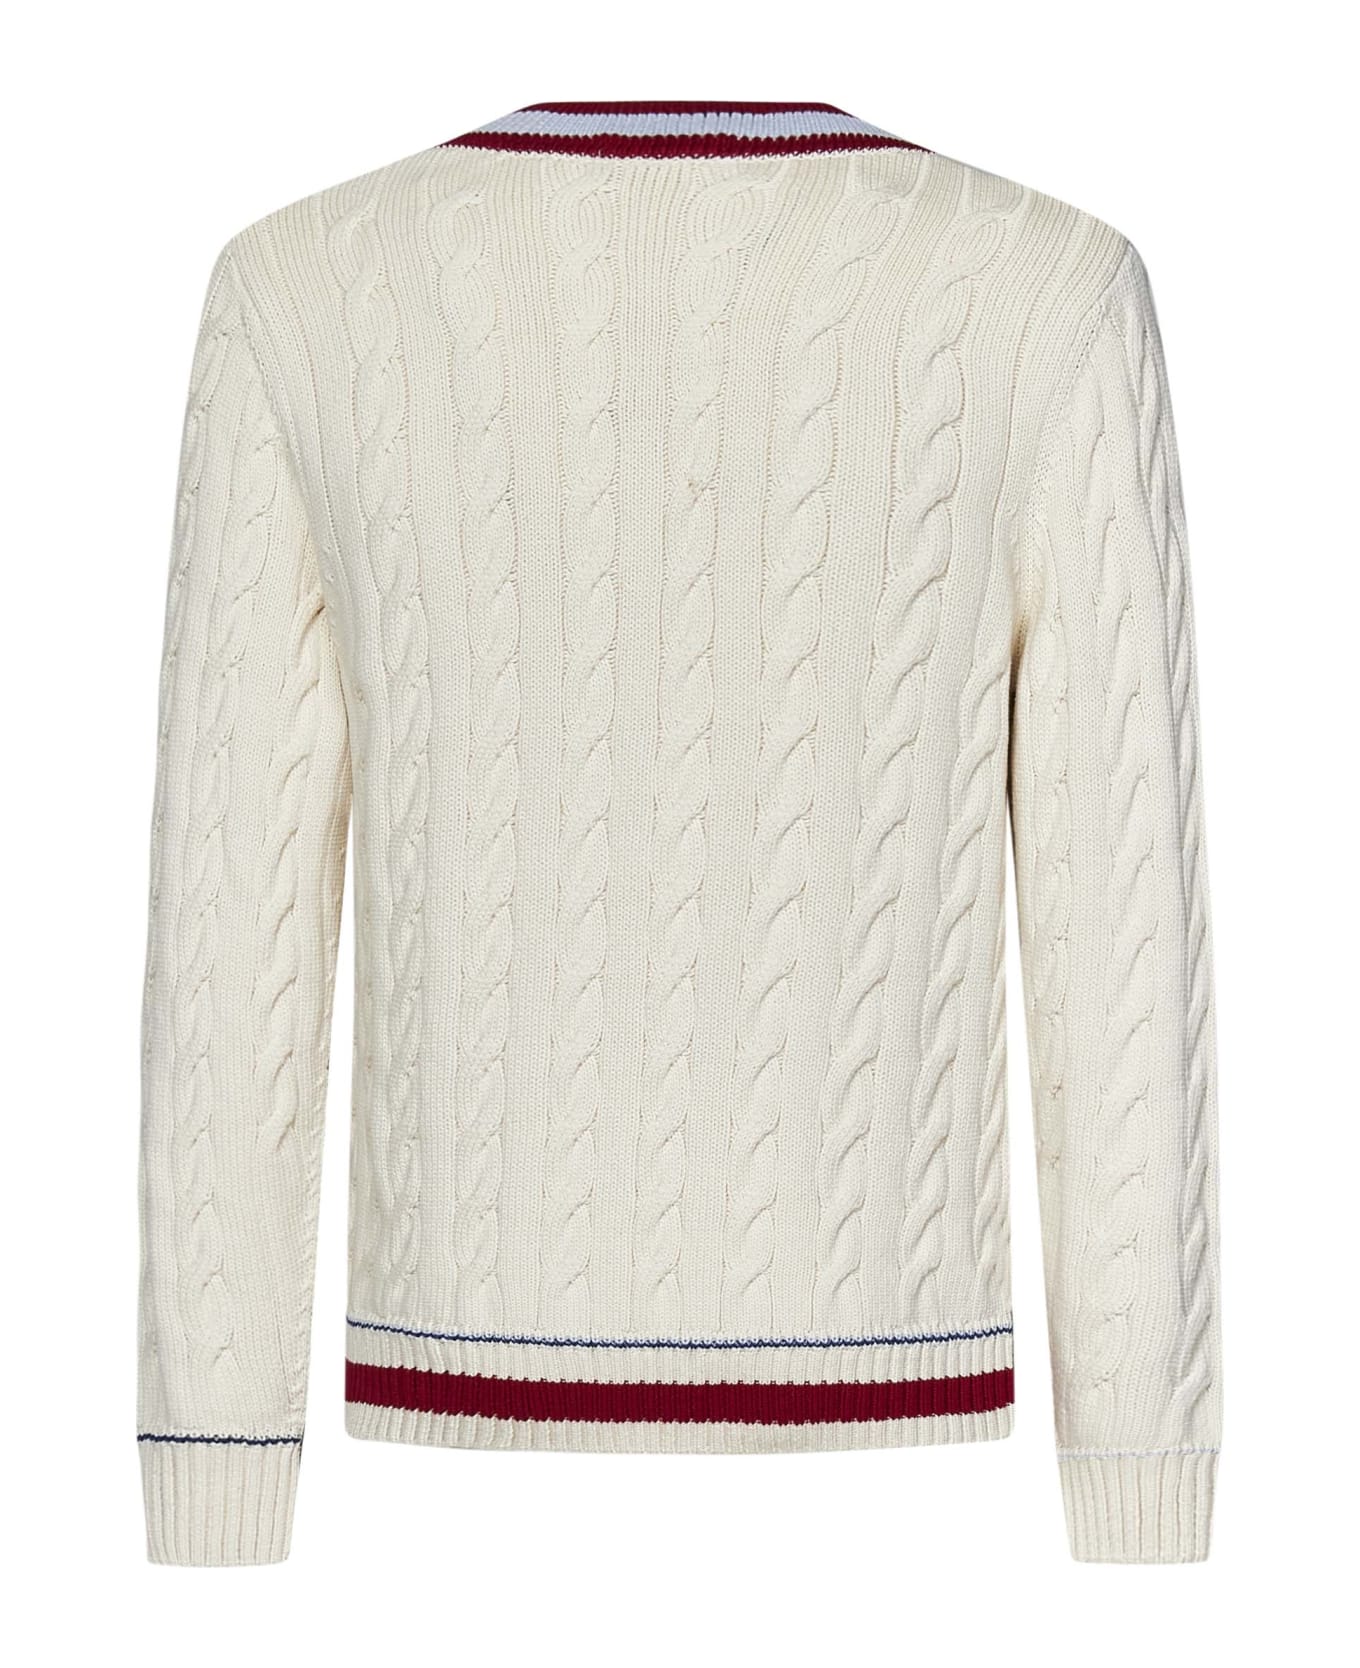 Lacoste Sweater - White